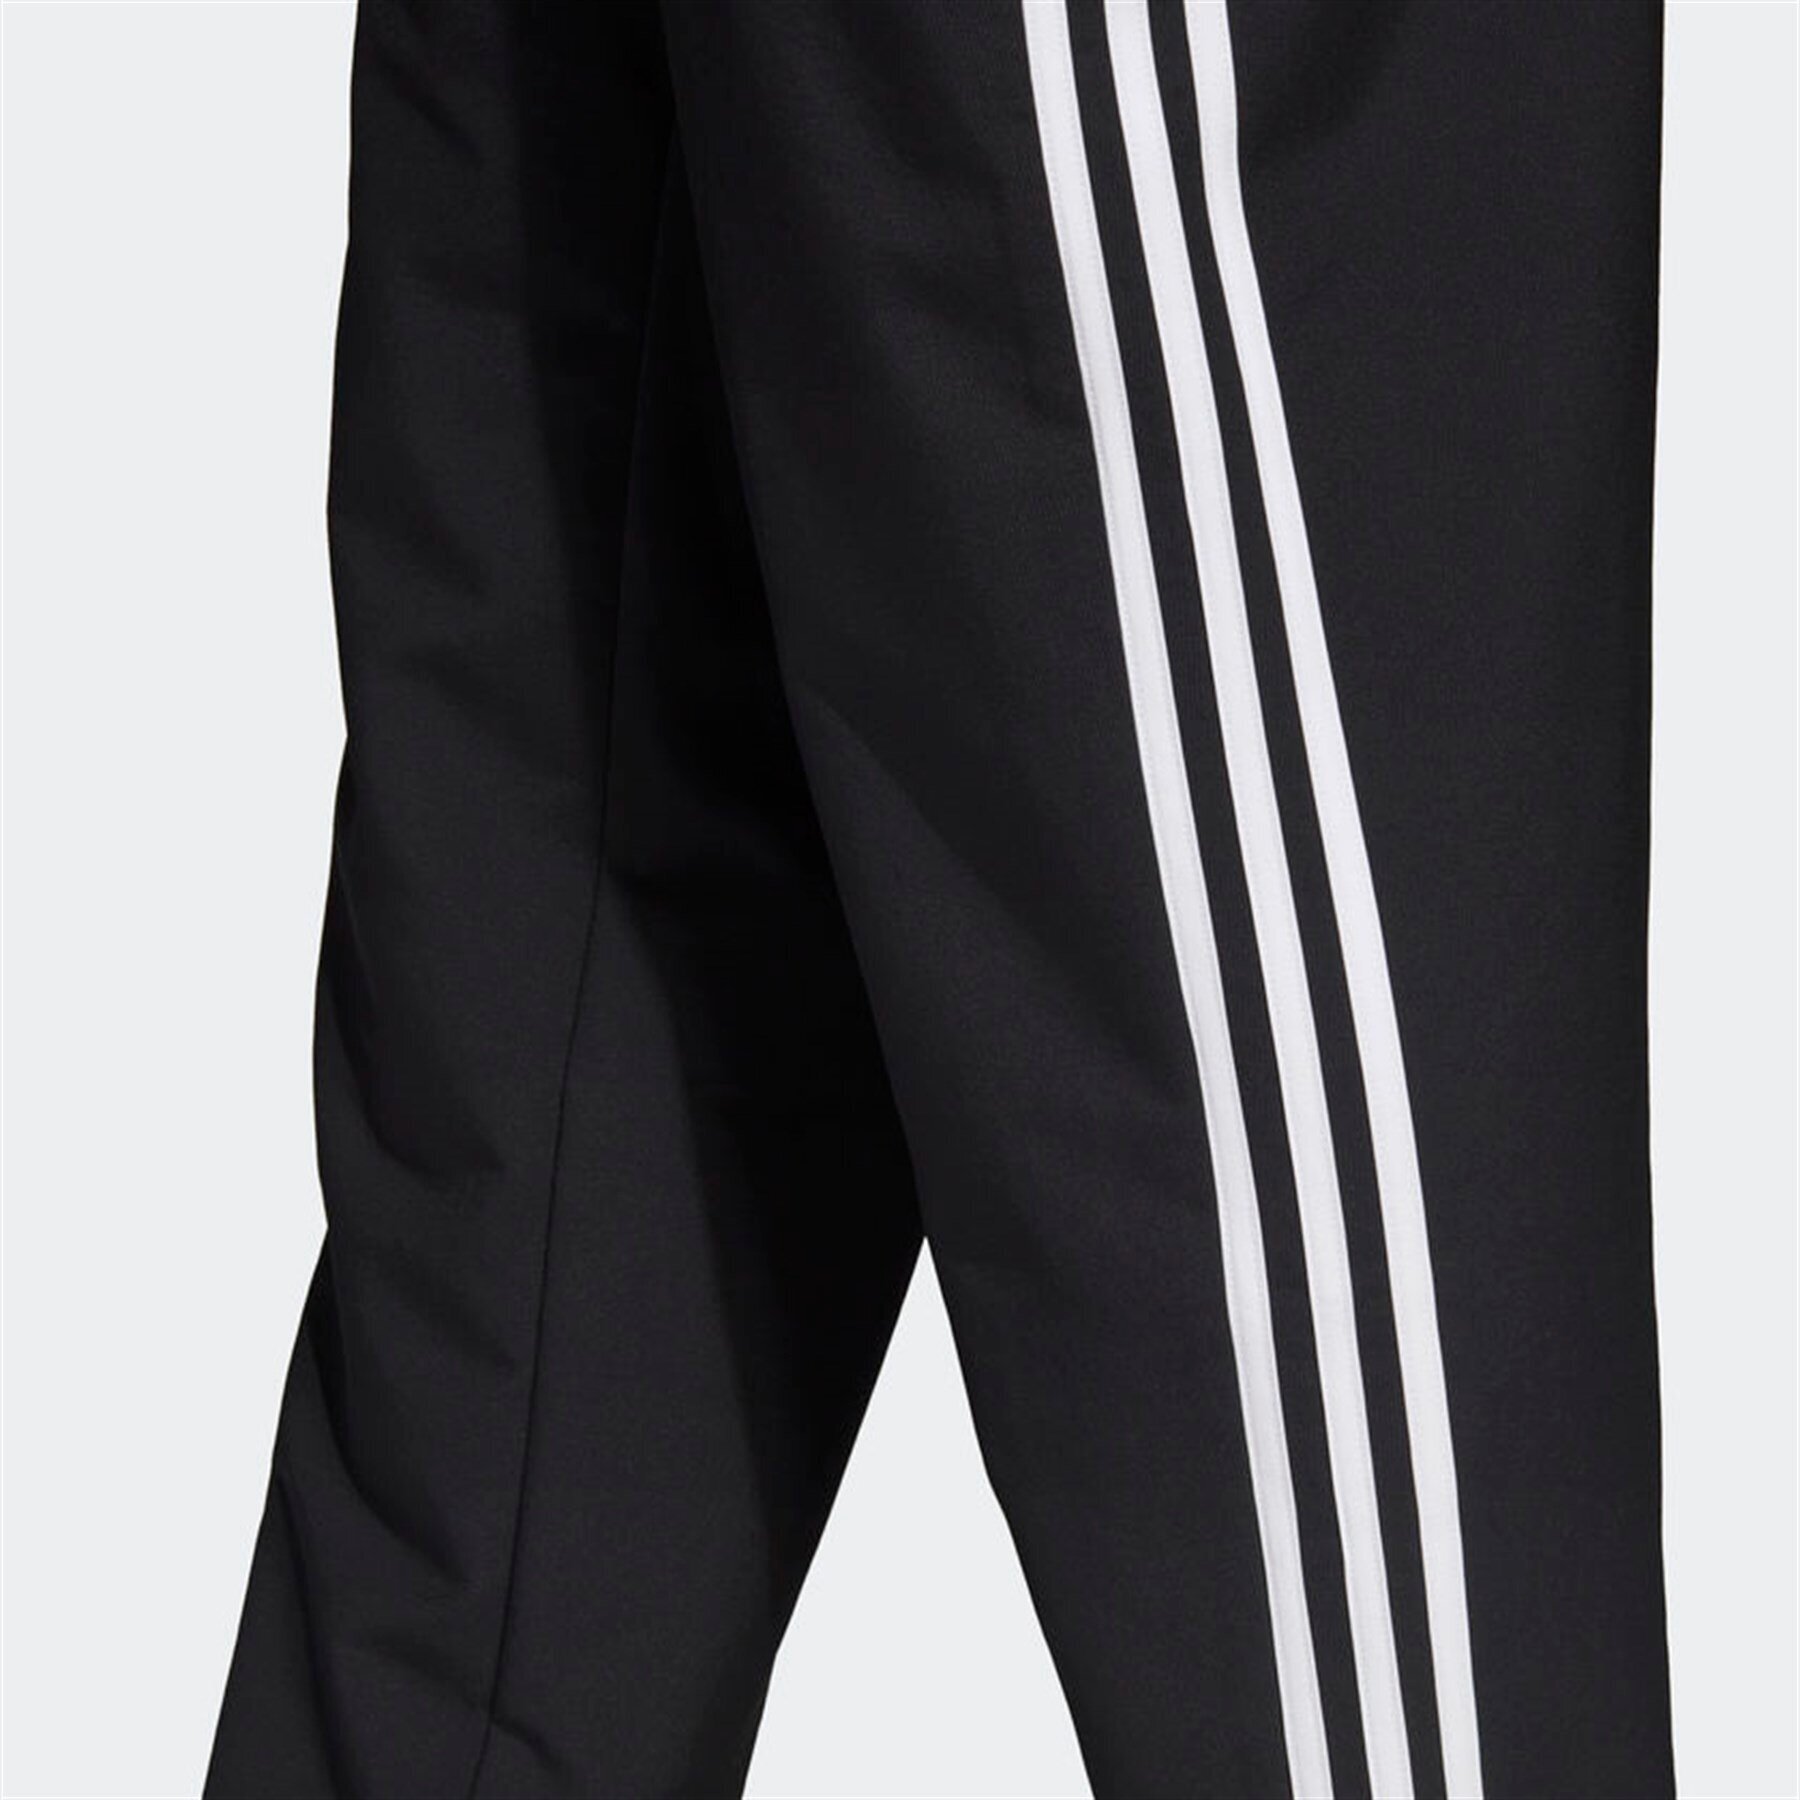 Adidas wind pants mens